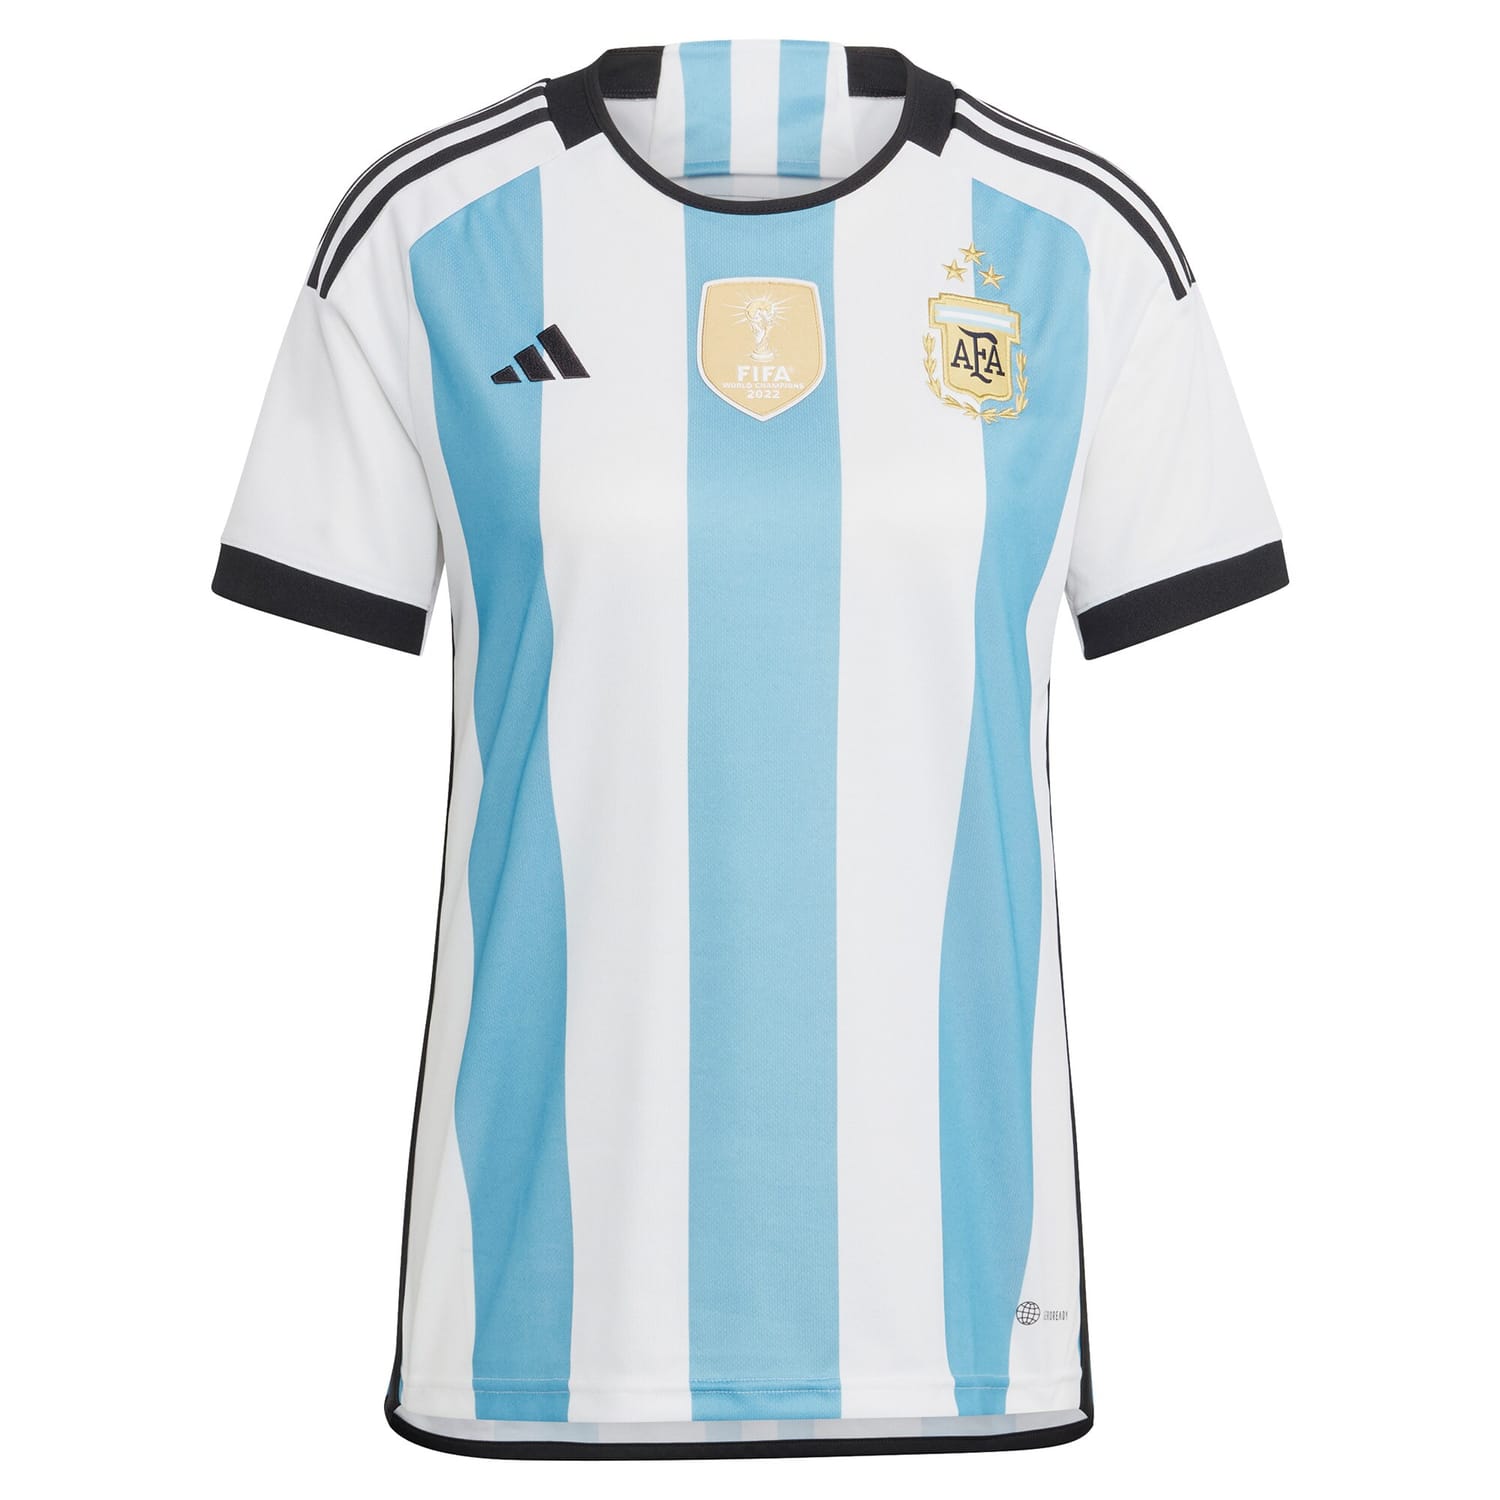 Champions Argentina National Team Home Winners Jersey Shirt White/Light Blue 2022 for Women